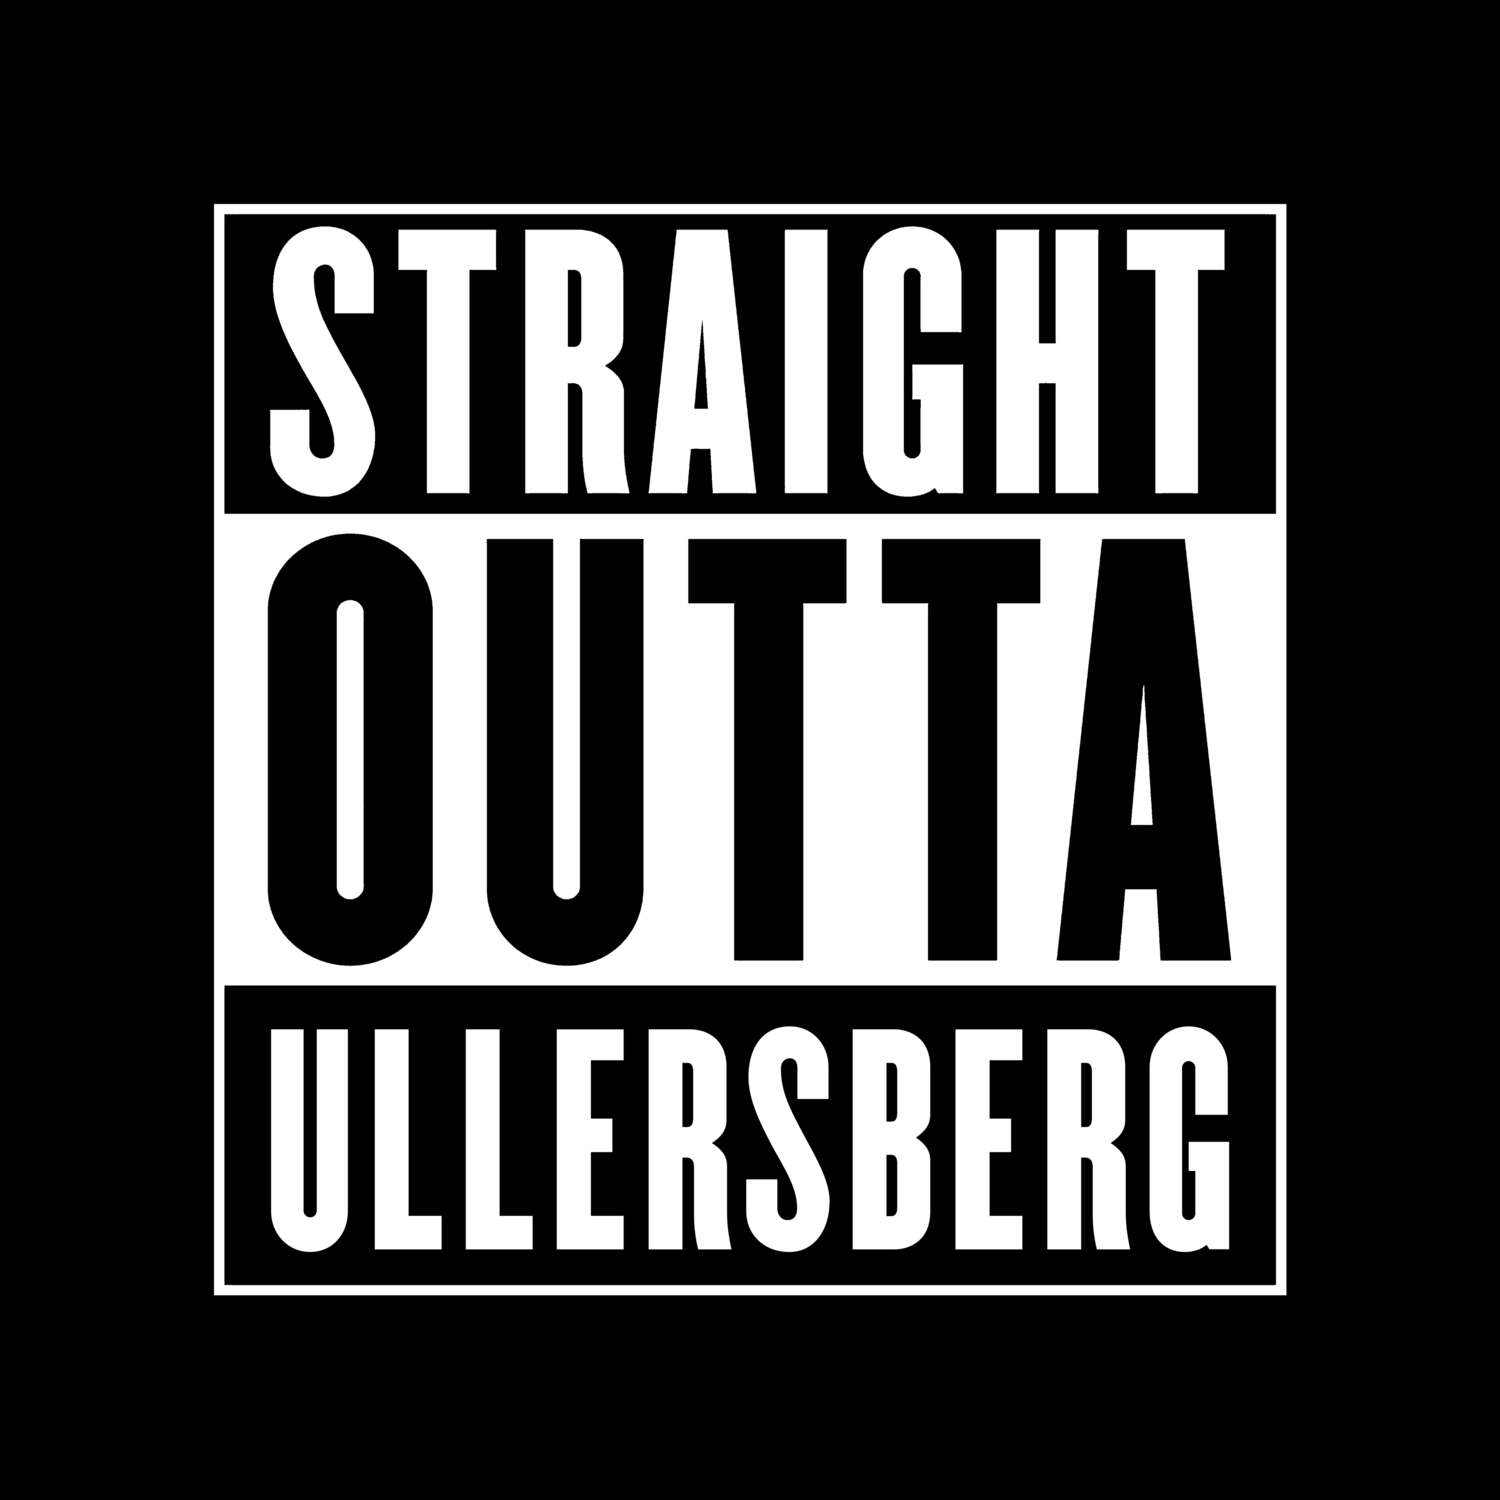 Ullersberg T-Shirt »Straight Outta«